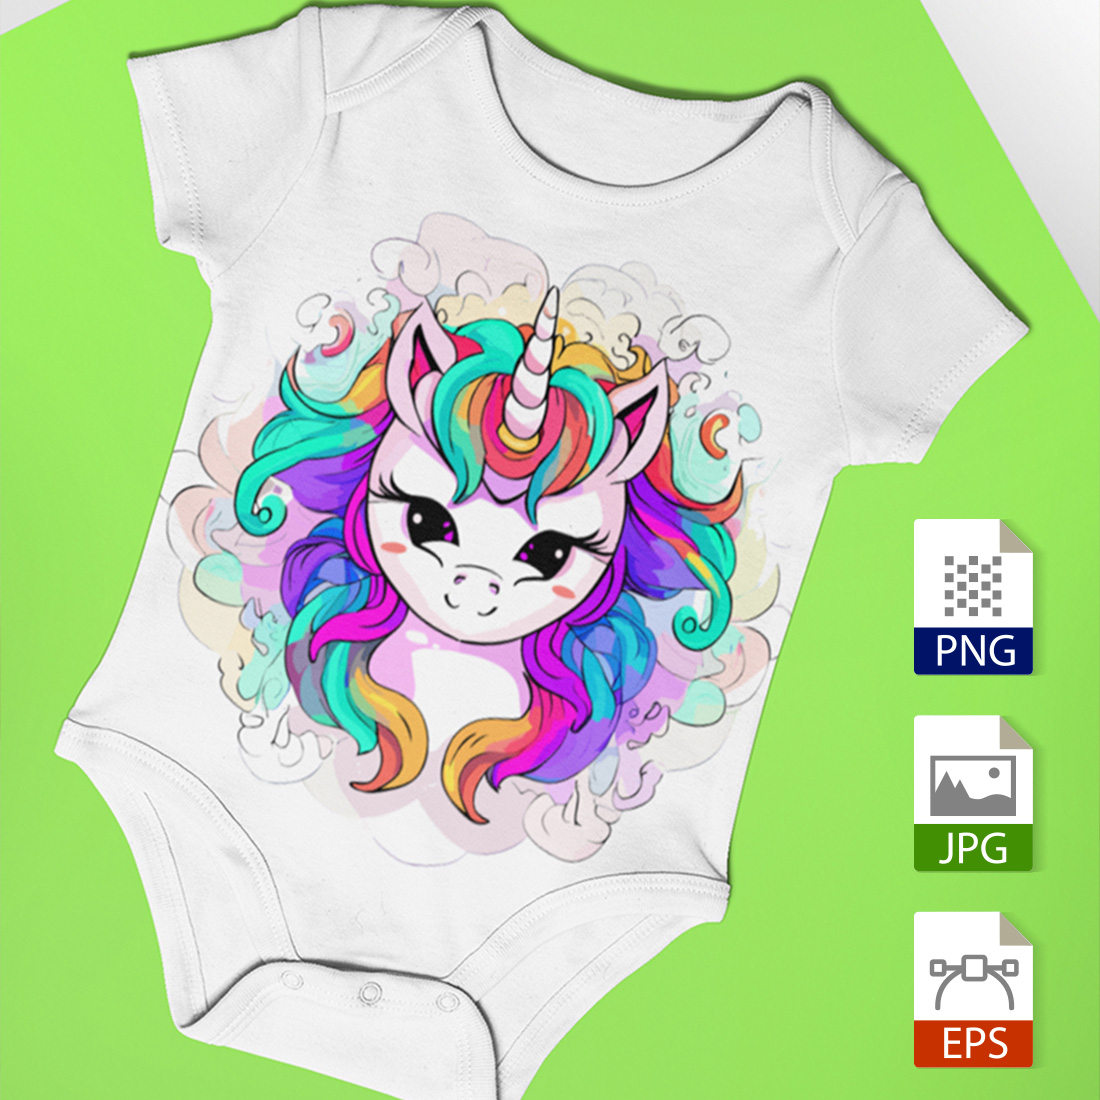 Baby Unicorn Magic cover image.